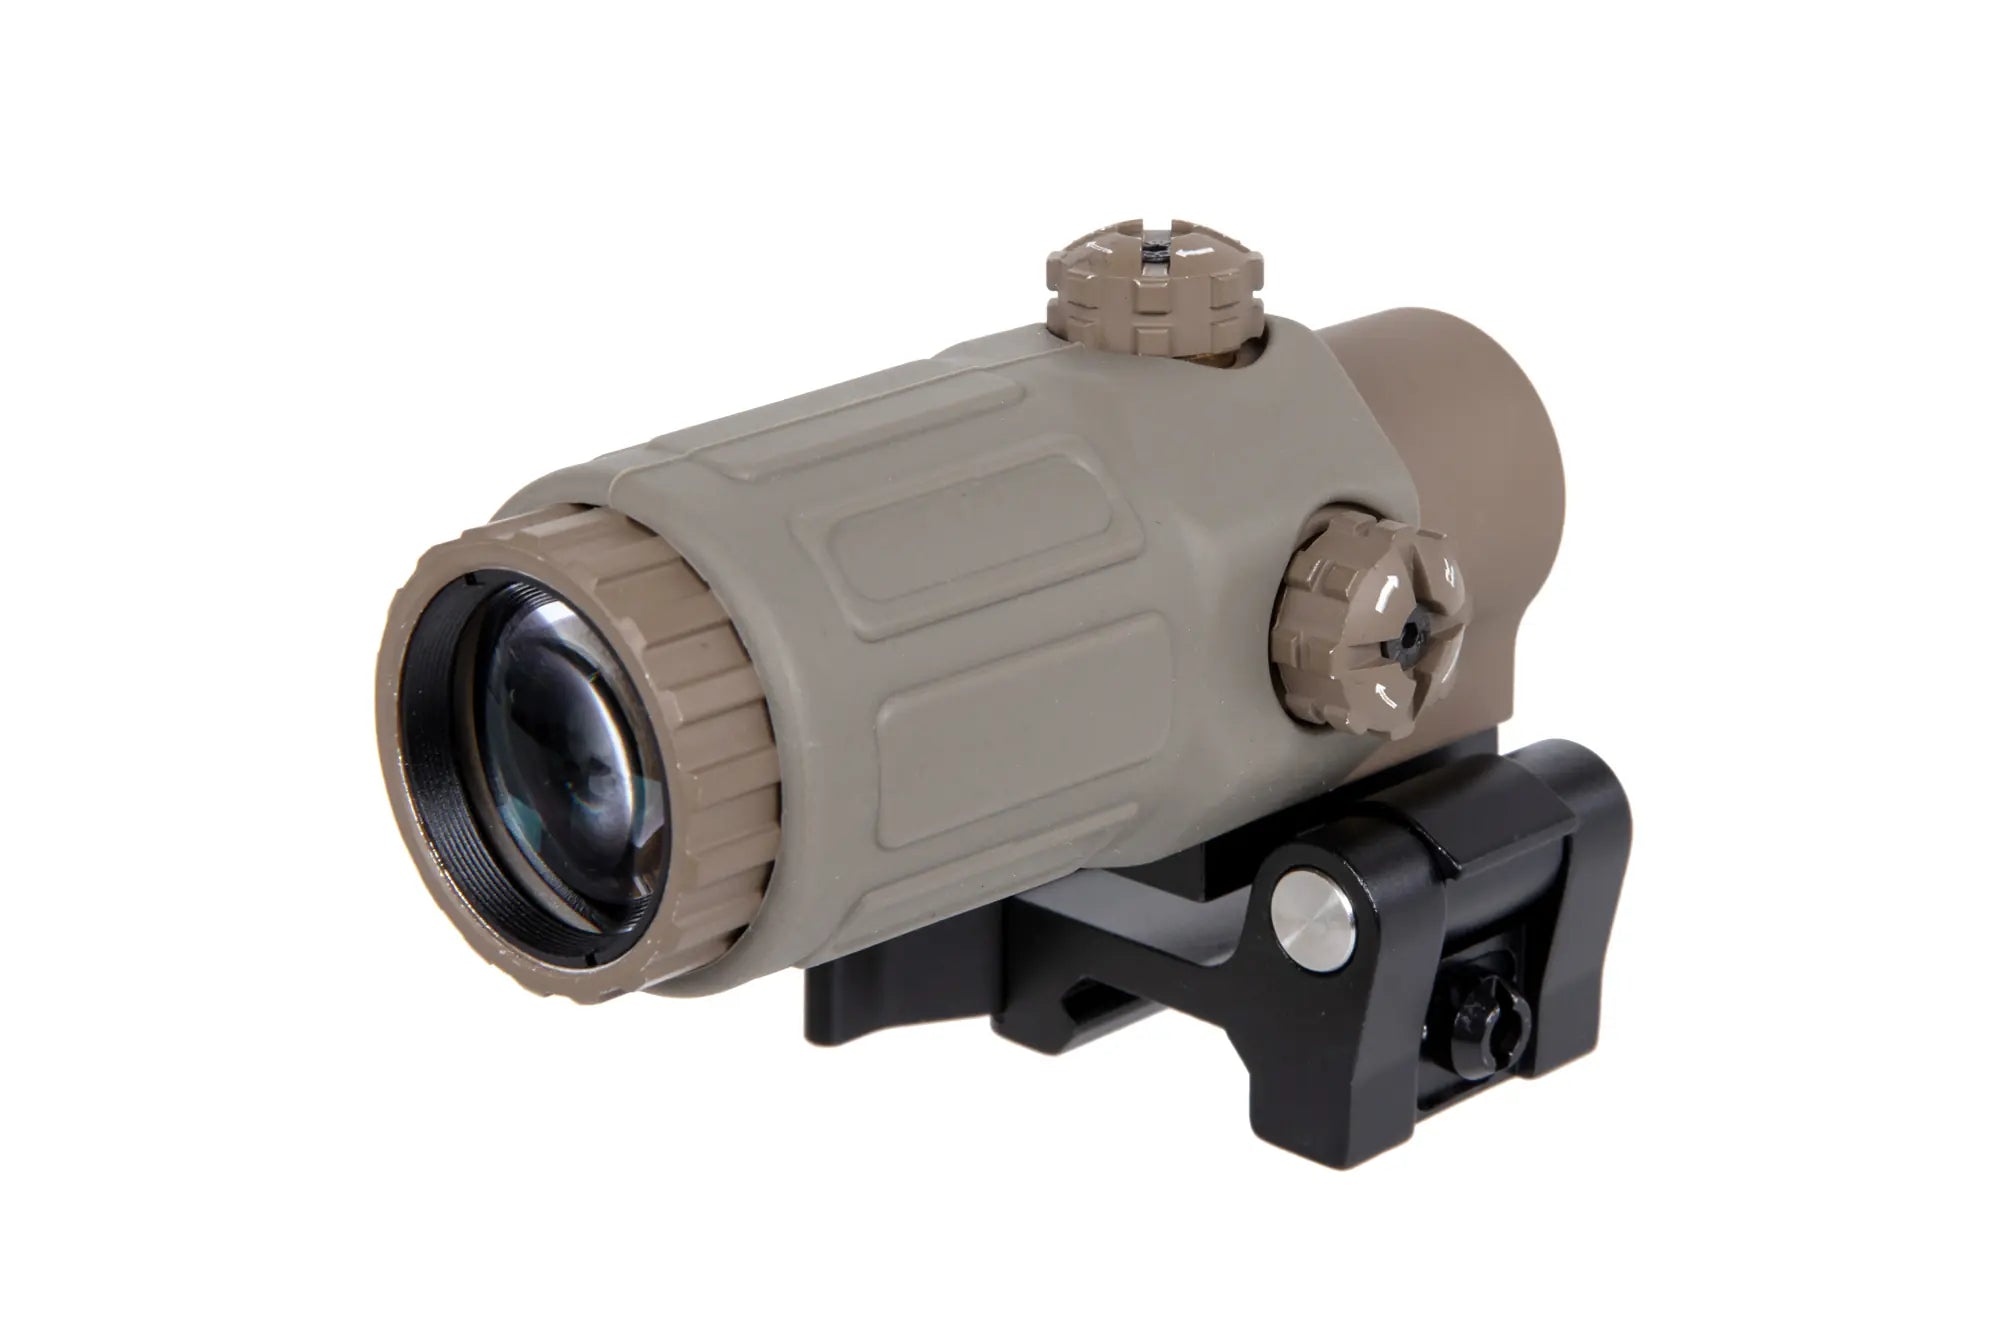 Magnifier replica scope type G33 Dark Earth-1